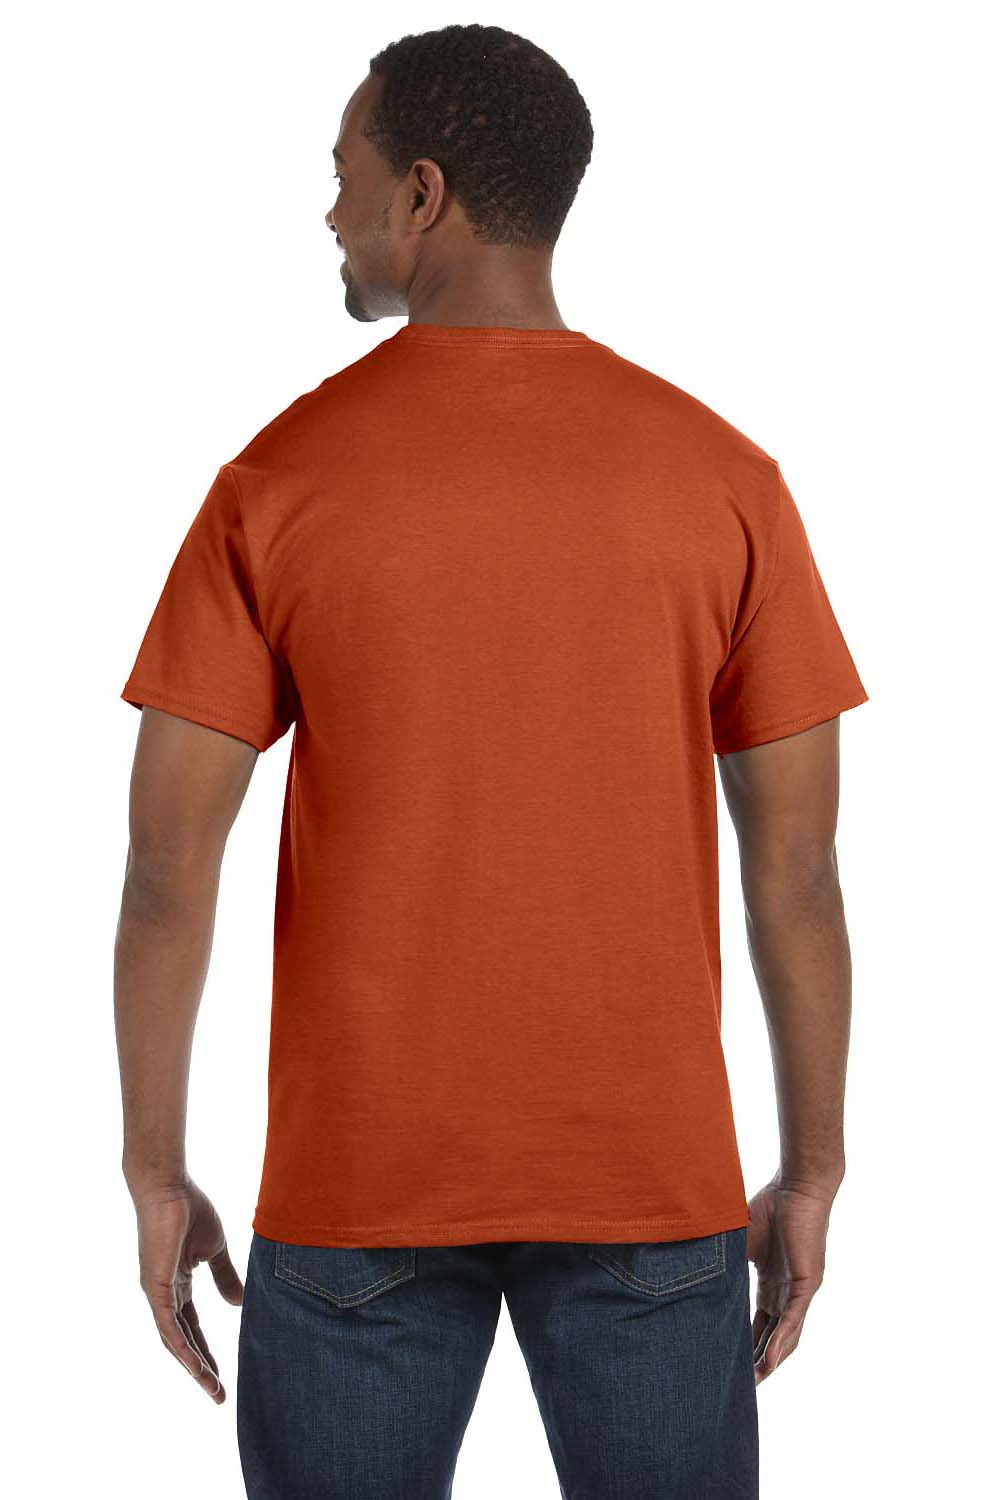 Jerzees 29M Mens Dri-Power Moisture Wicking Short Sleeve Crewneck T-Shirt Texas Orange Back